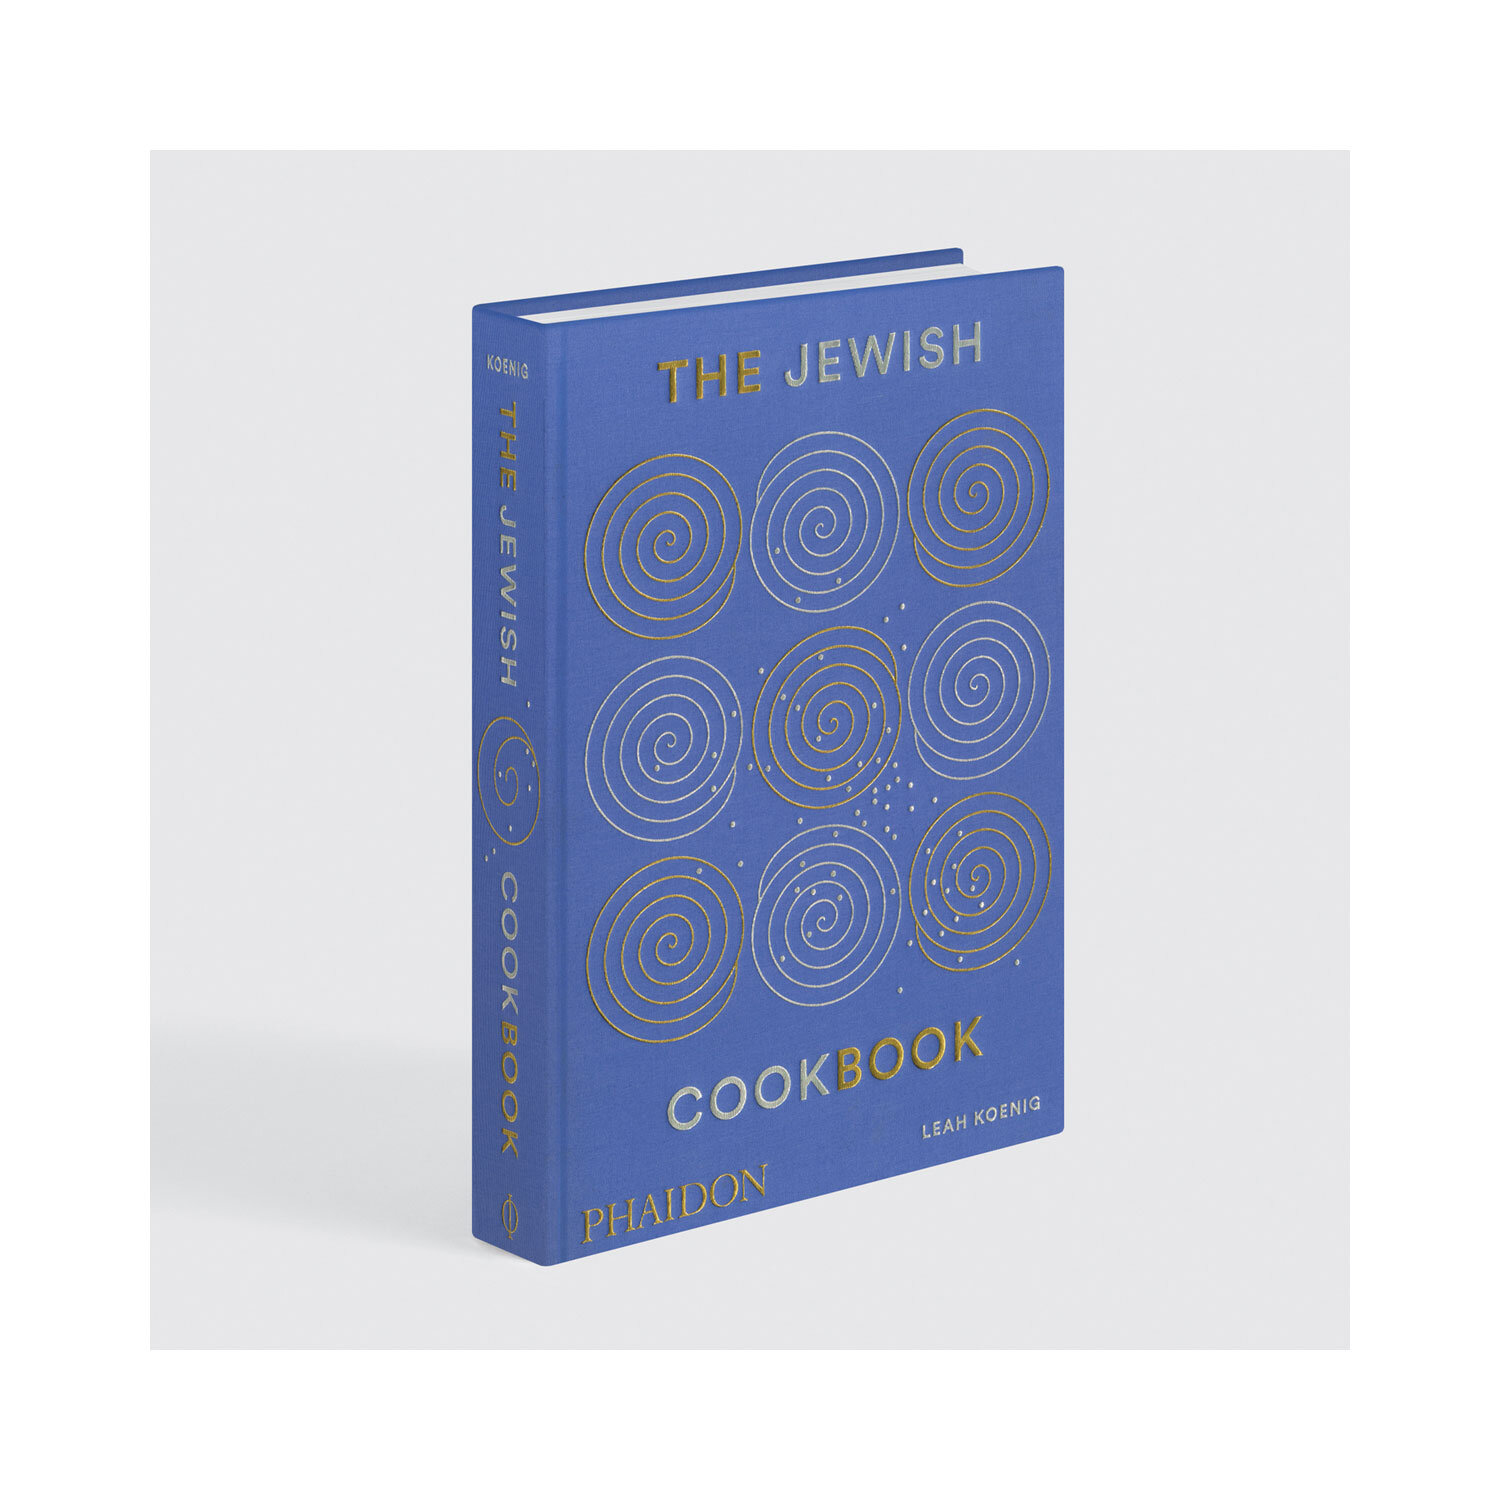 The Jewish Cookbook by Leah Koenig